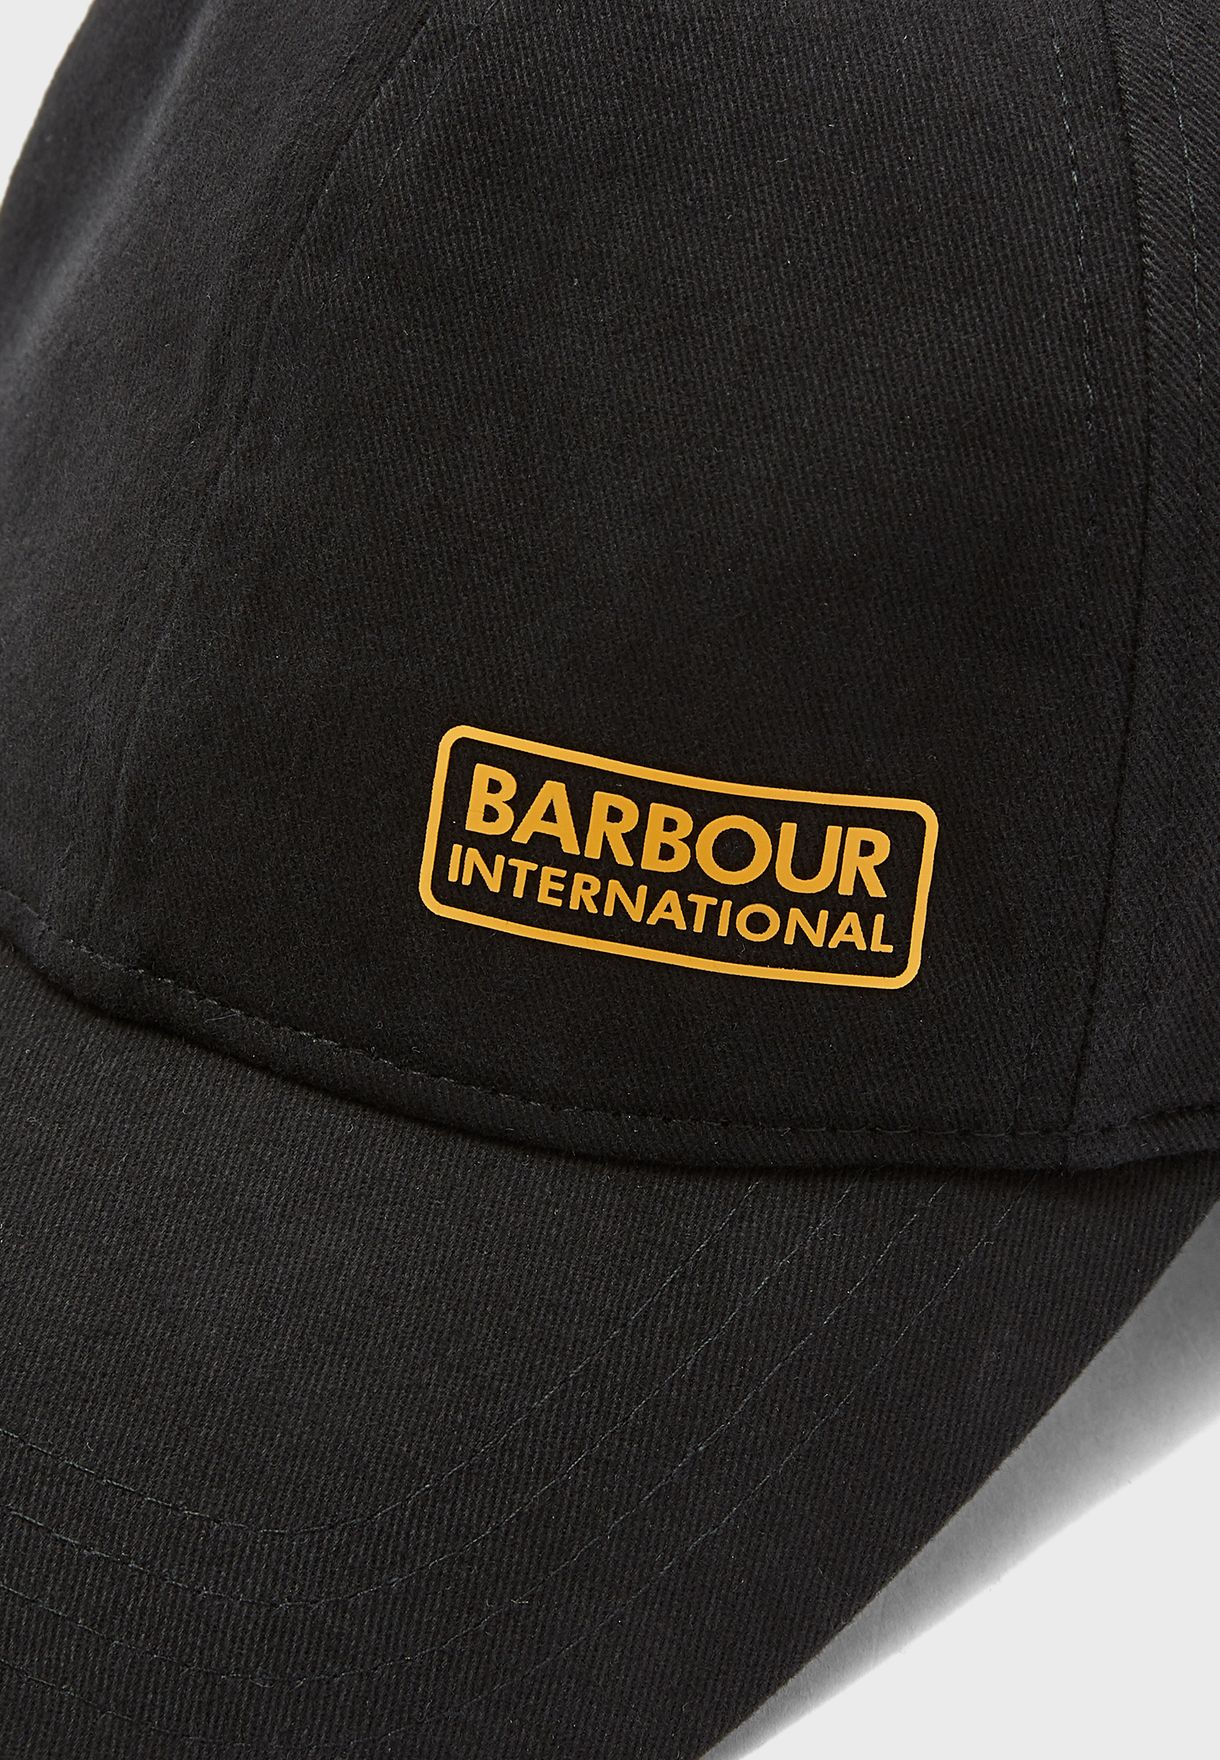 Barbour International Cap Top Sellers, 59% OFF | www 